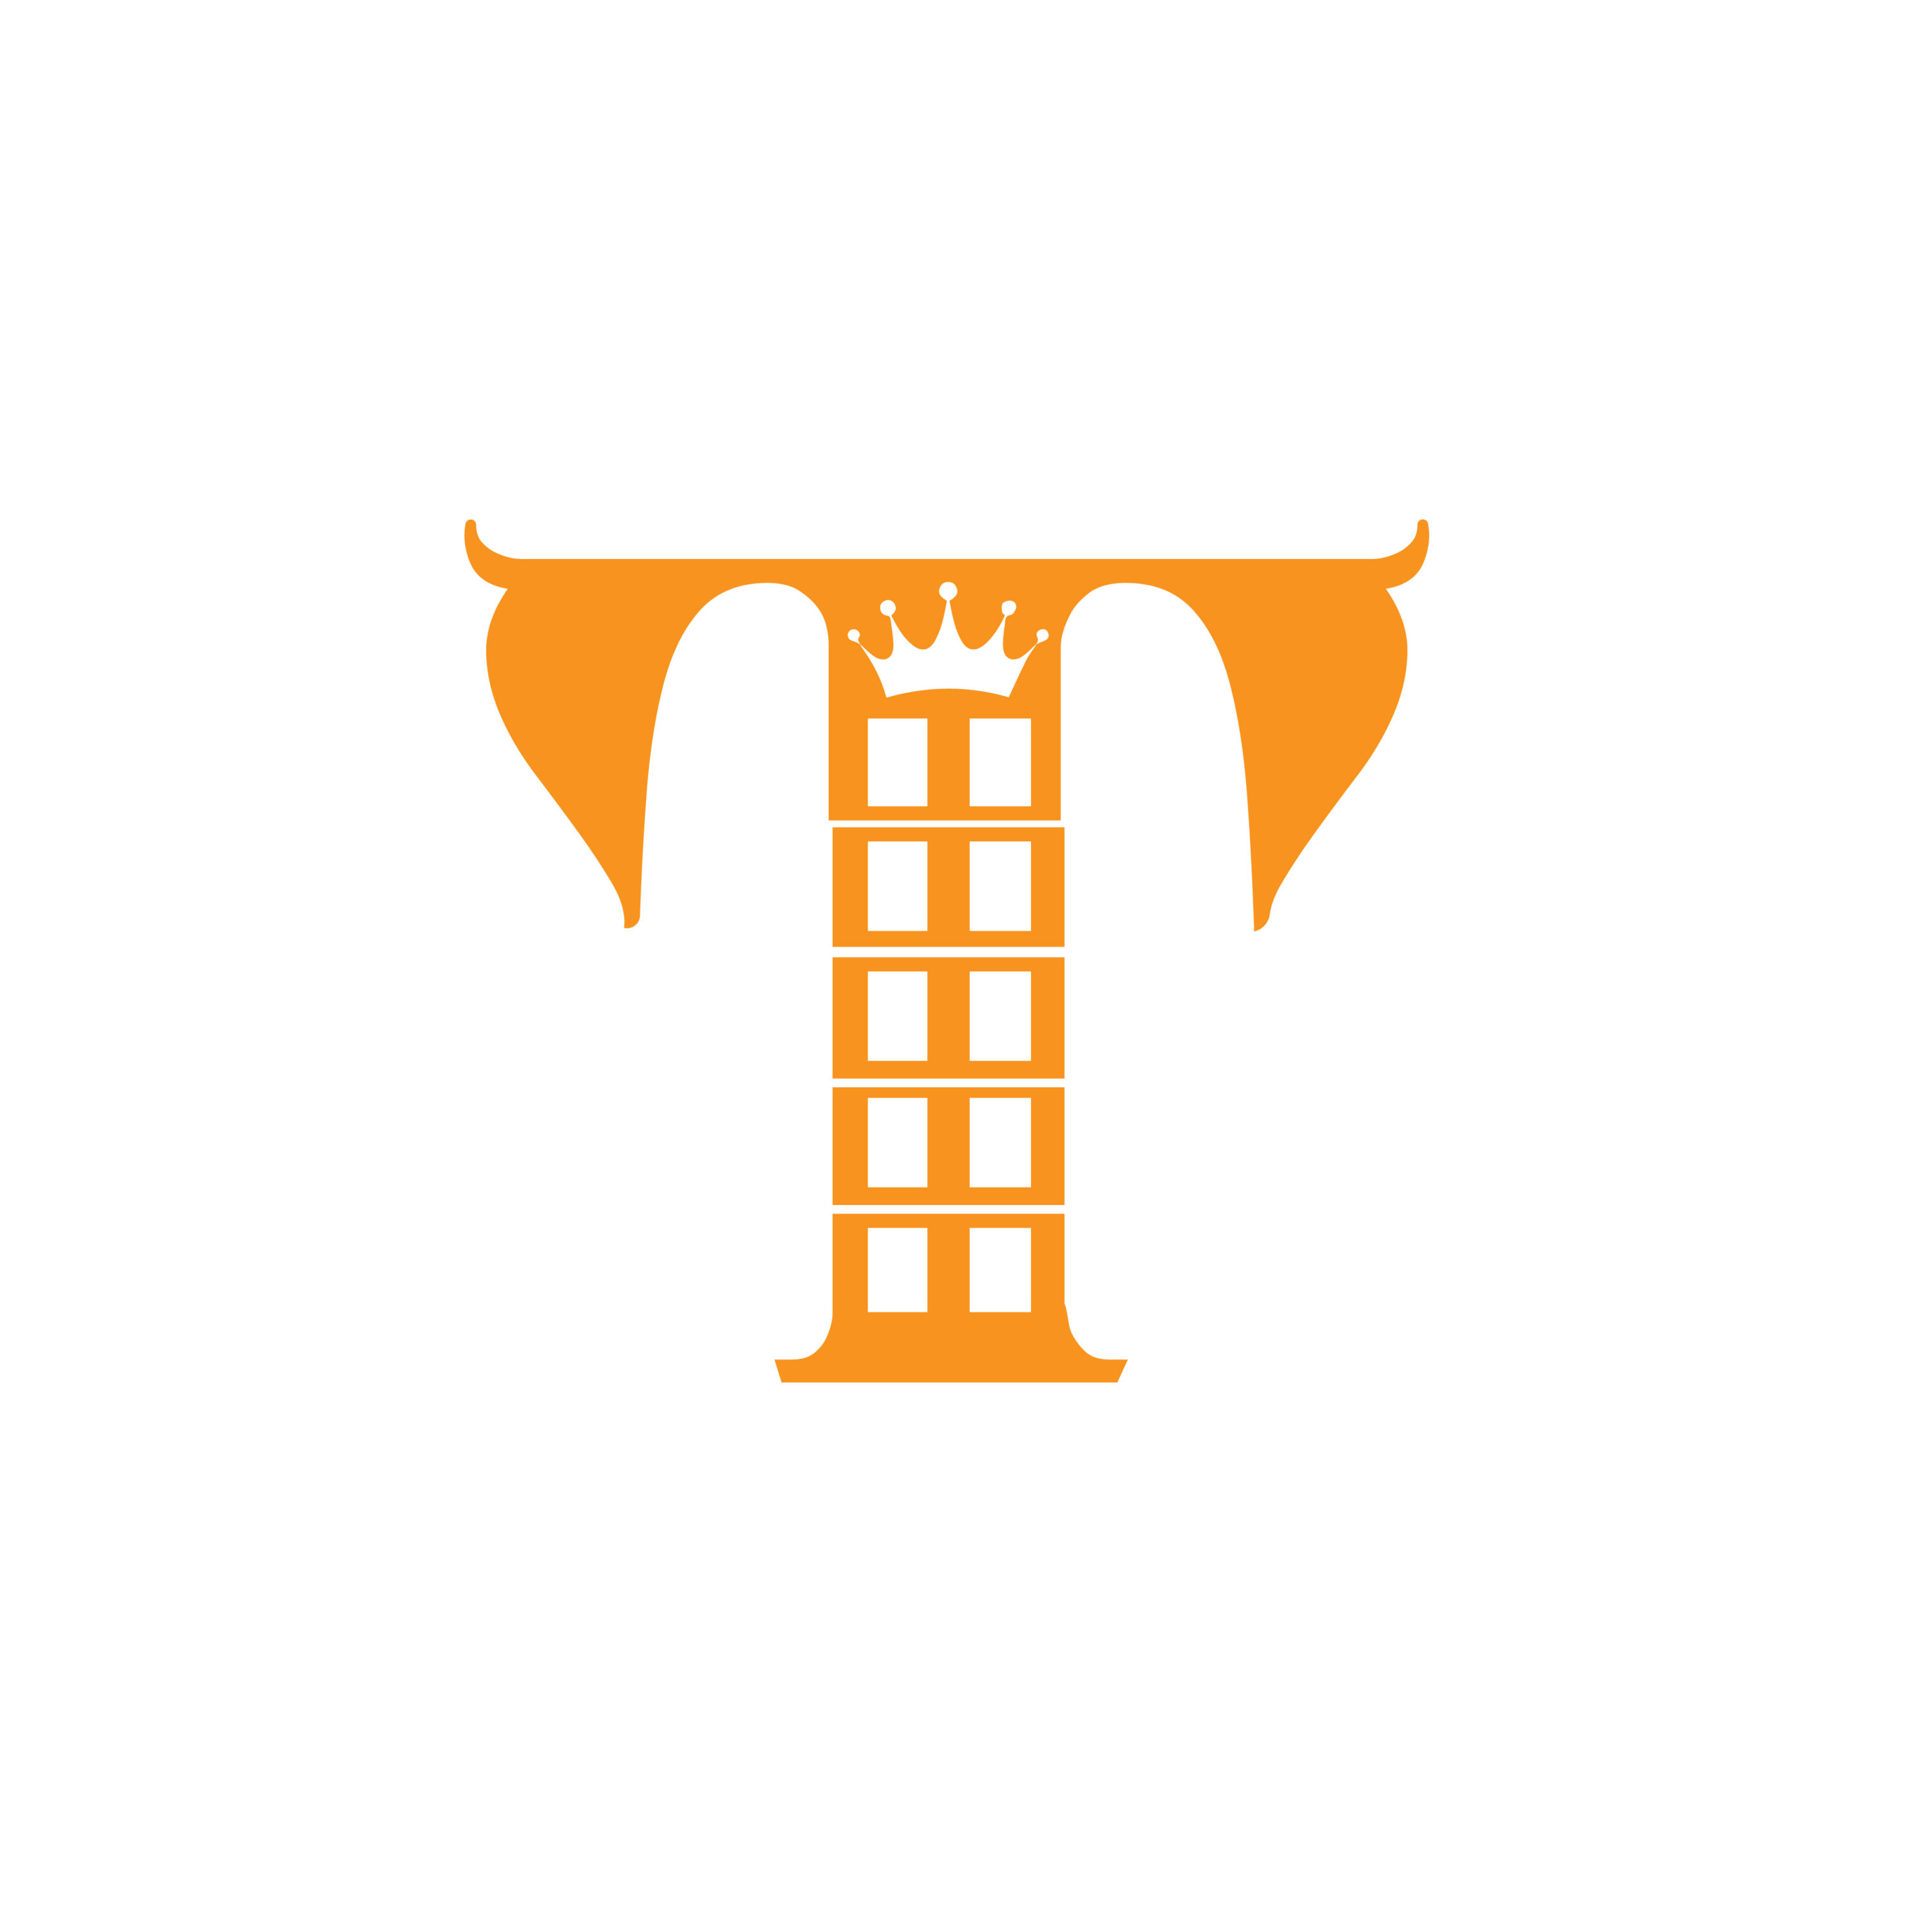 T Letter Orange Logo Design cover image.